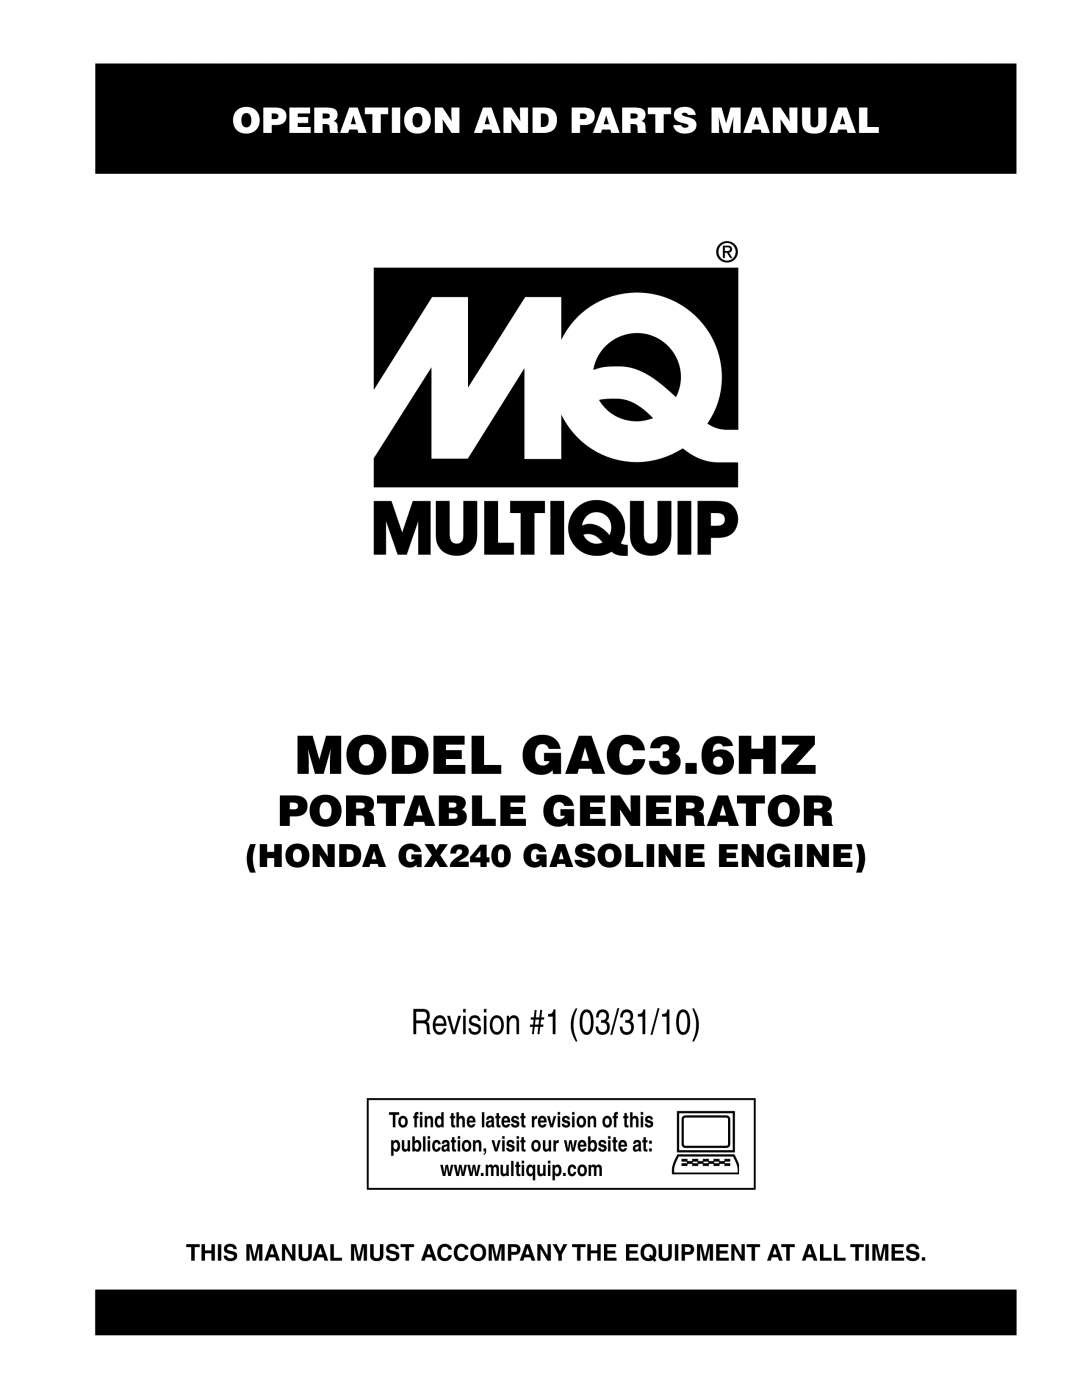 Multiquip GAC3.6HZ manual Model gac3.6hz 